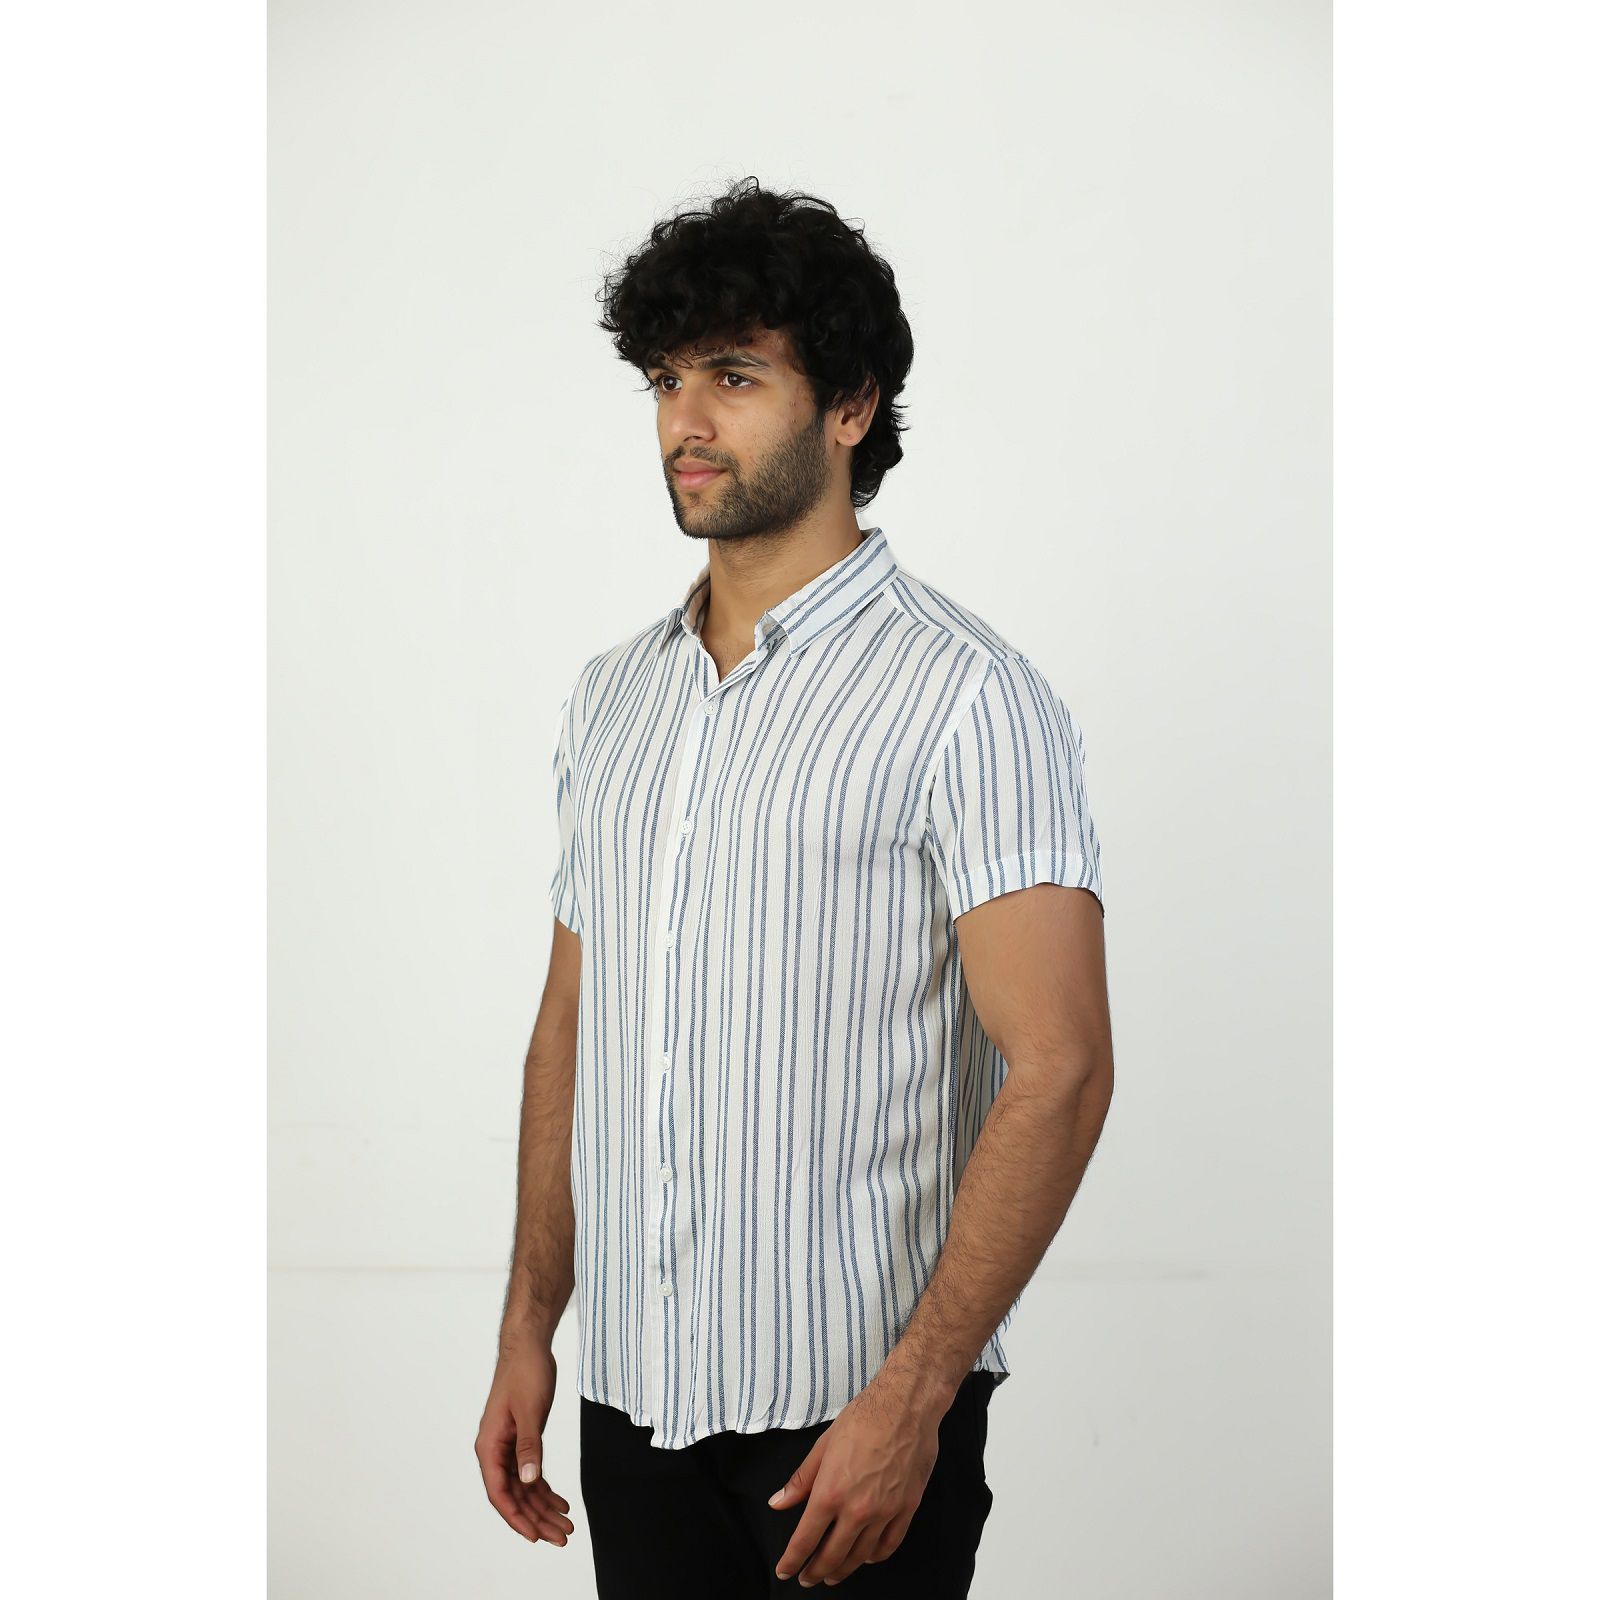 Sky stripes -Printed shirt